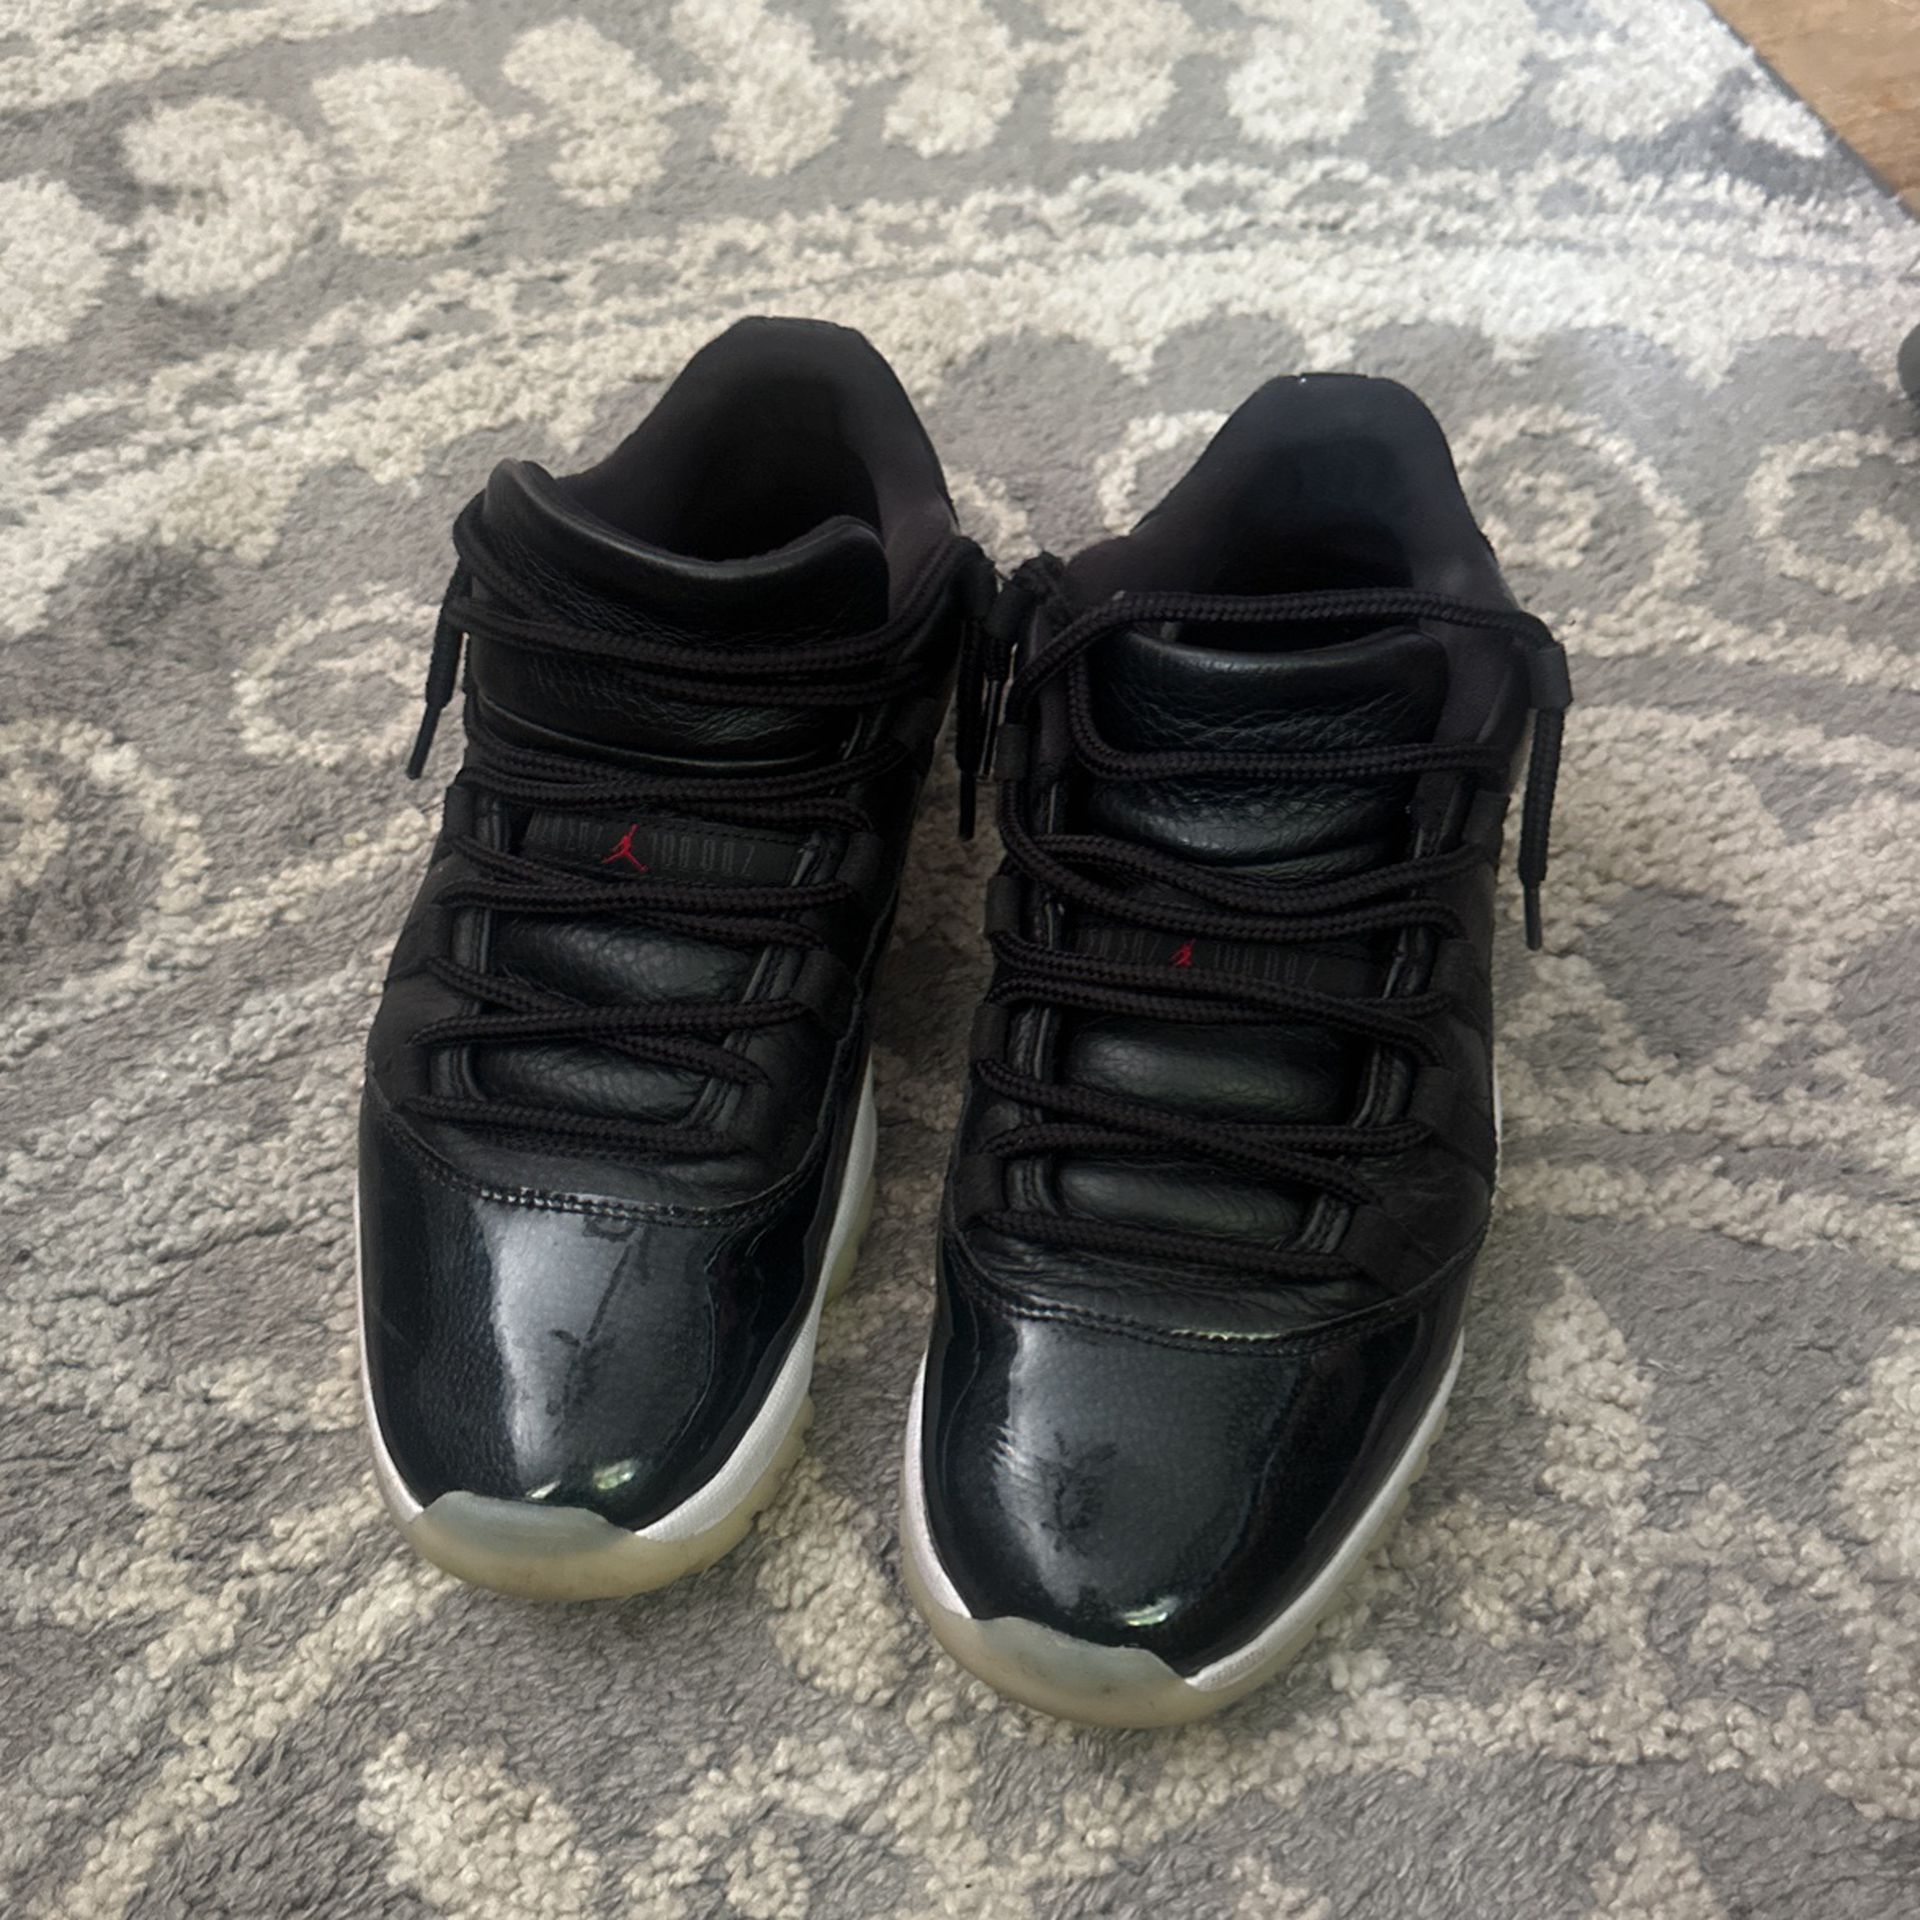 Jordan 11s, Black, size 10